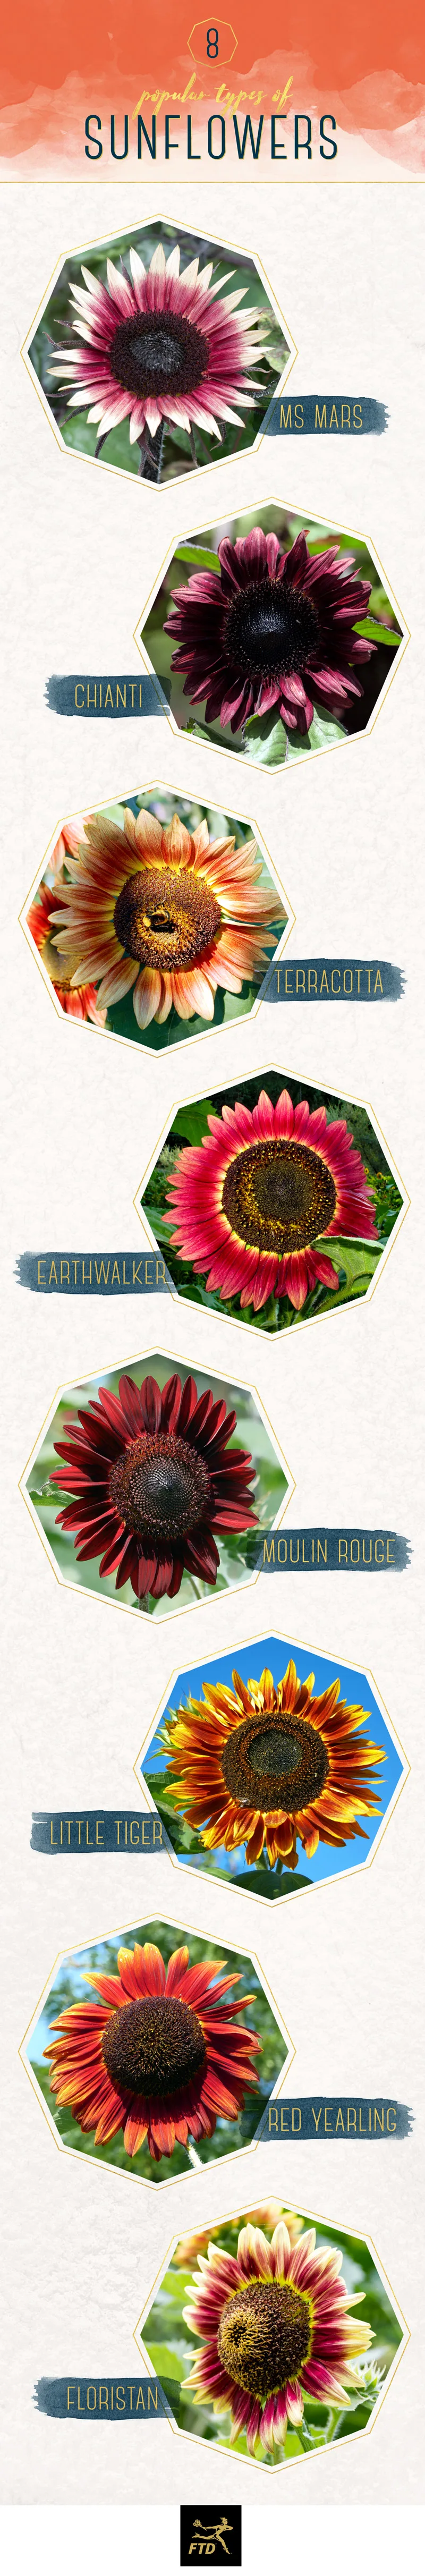 types-of-sunflowers-IG